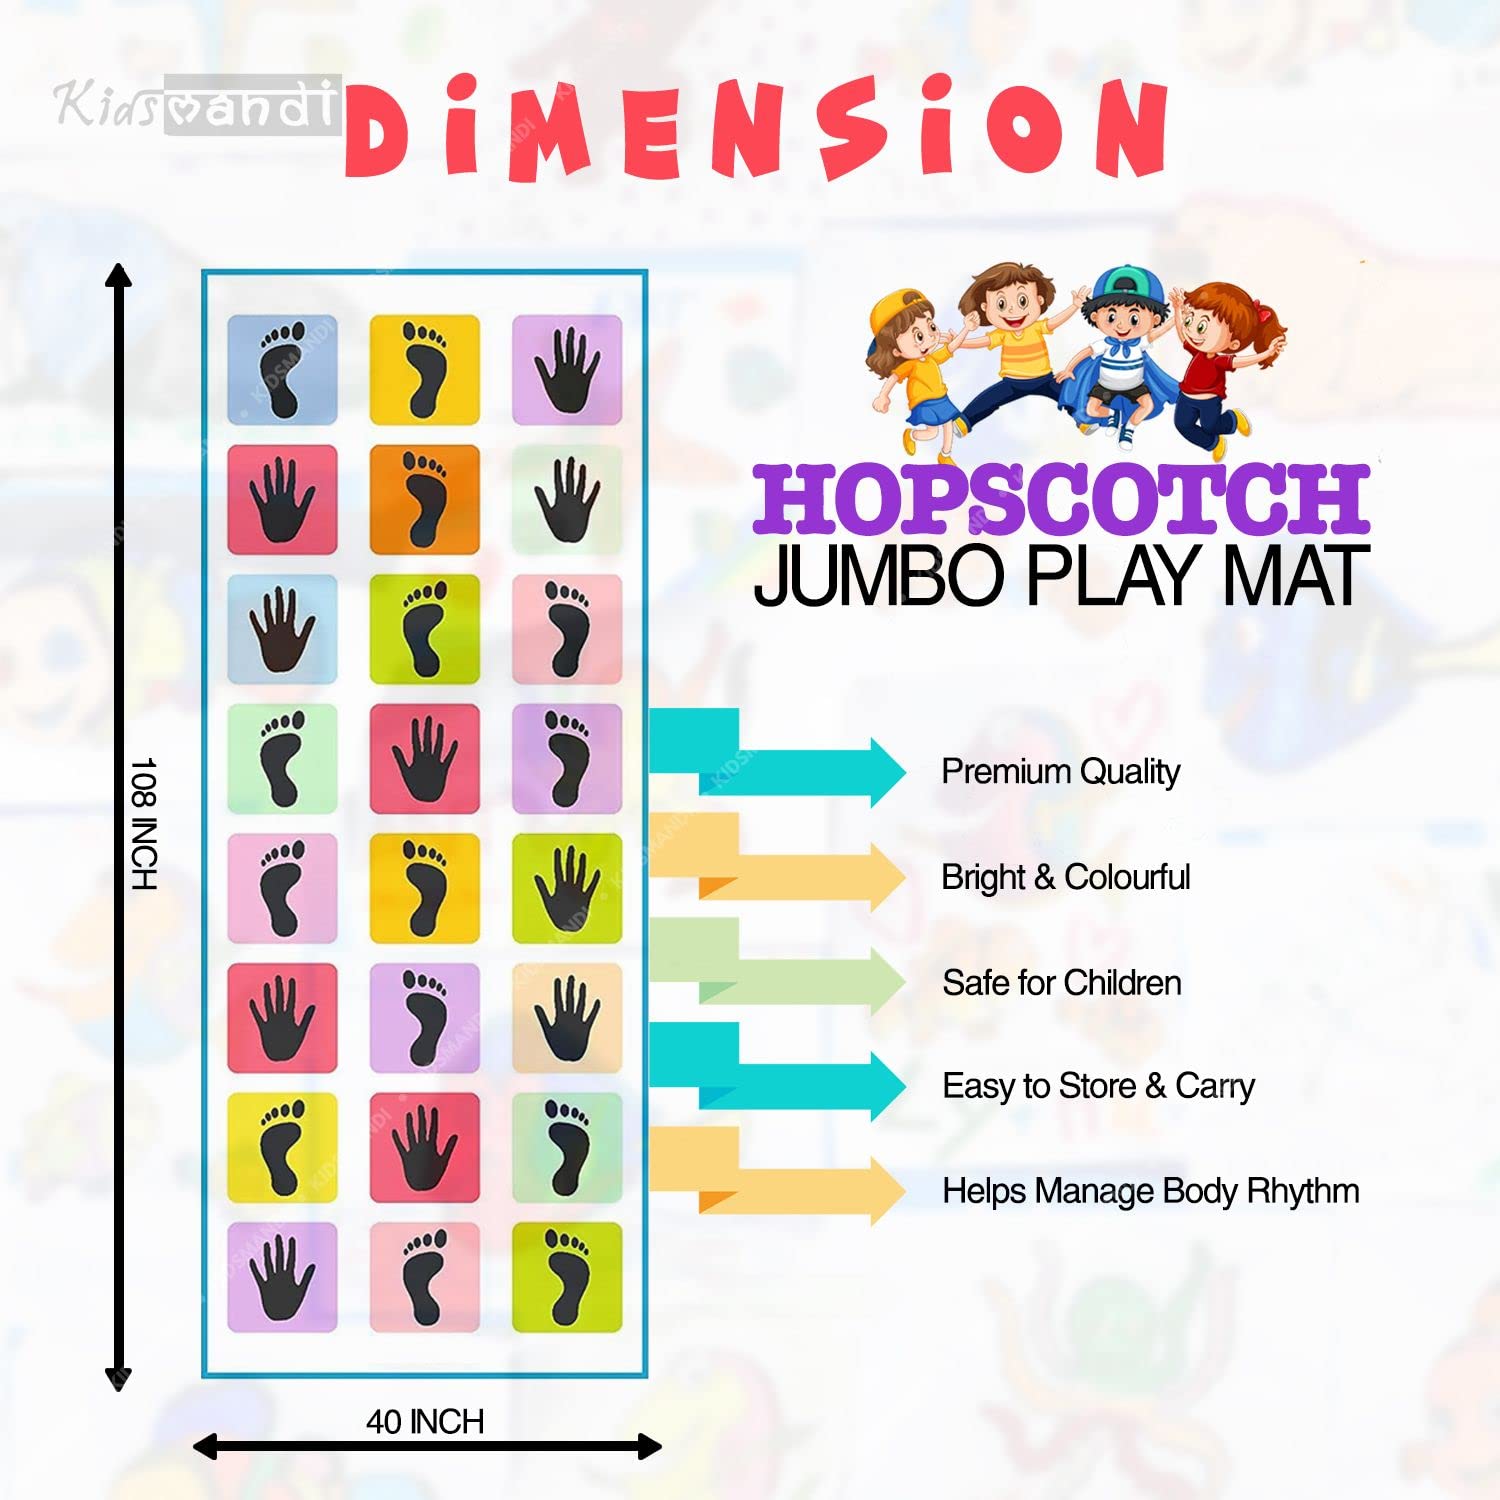 Kids Mandi Hopscotch Jumbo Play Mat Game, Family Game, Multicolor